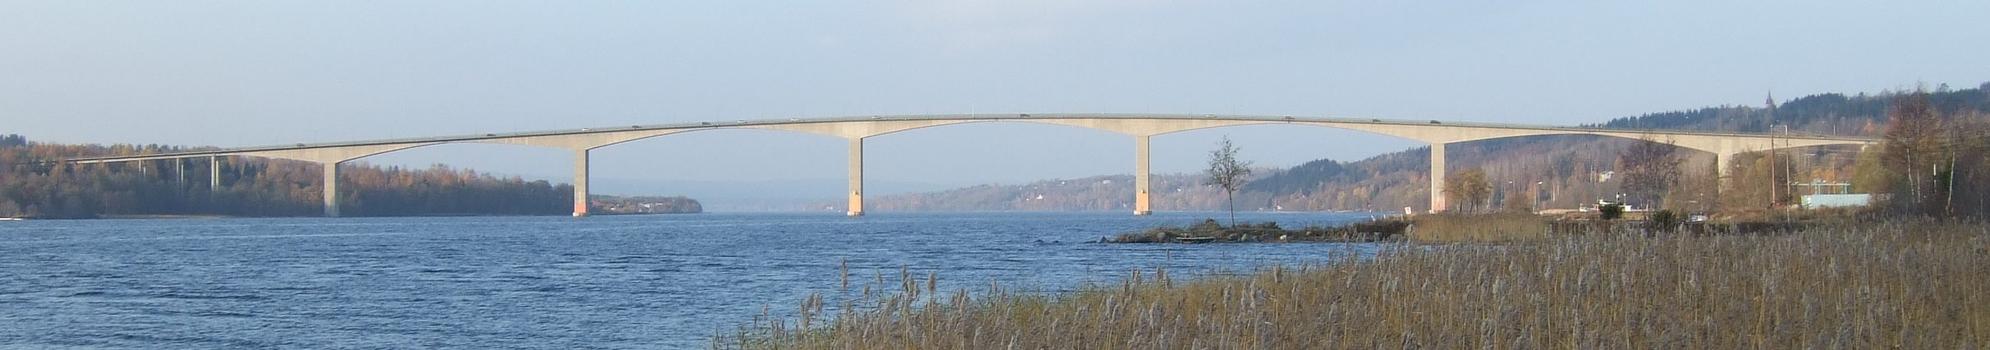 Alnö Bridge in Sundsvall, Sweden